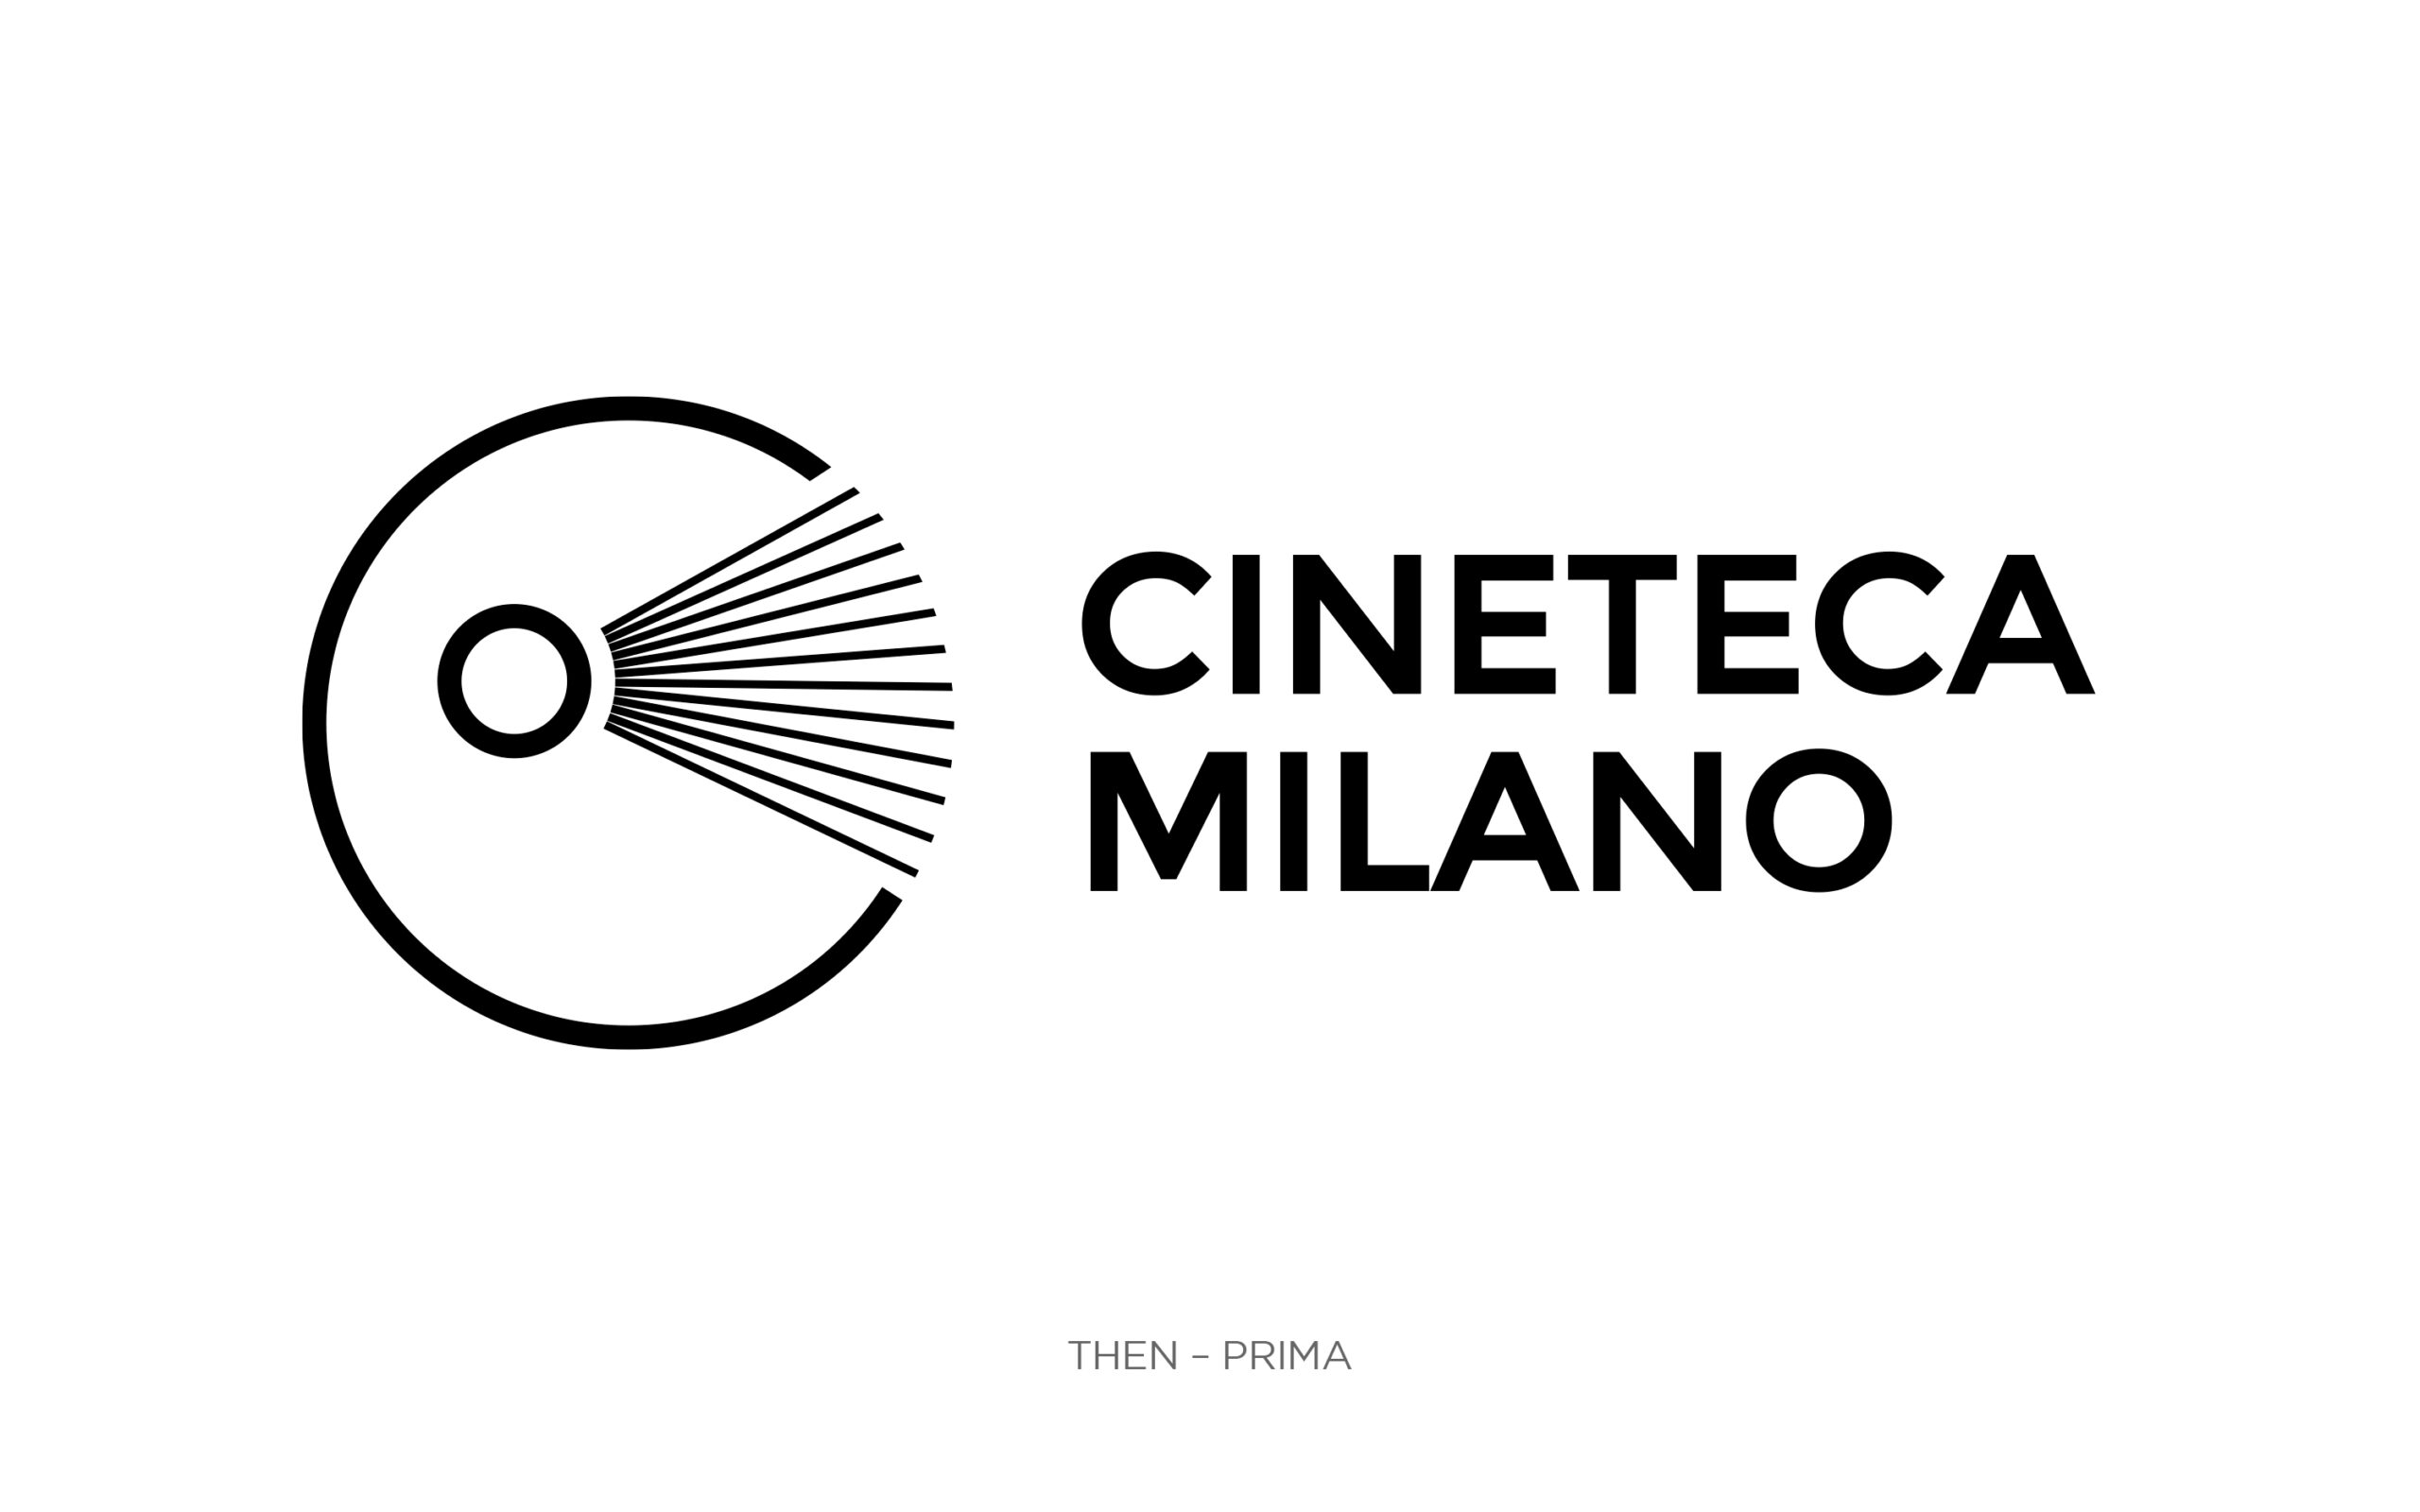 Cineteca Milano logo old